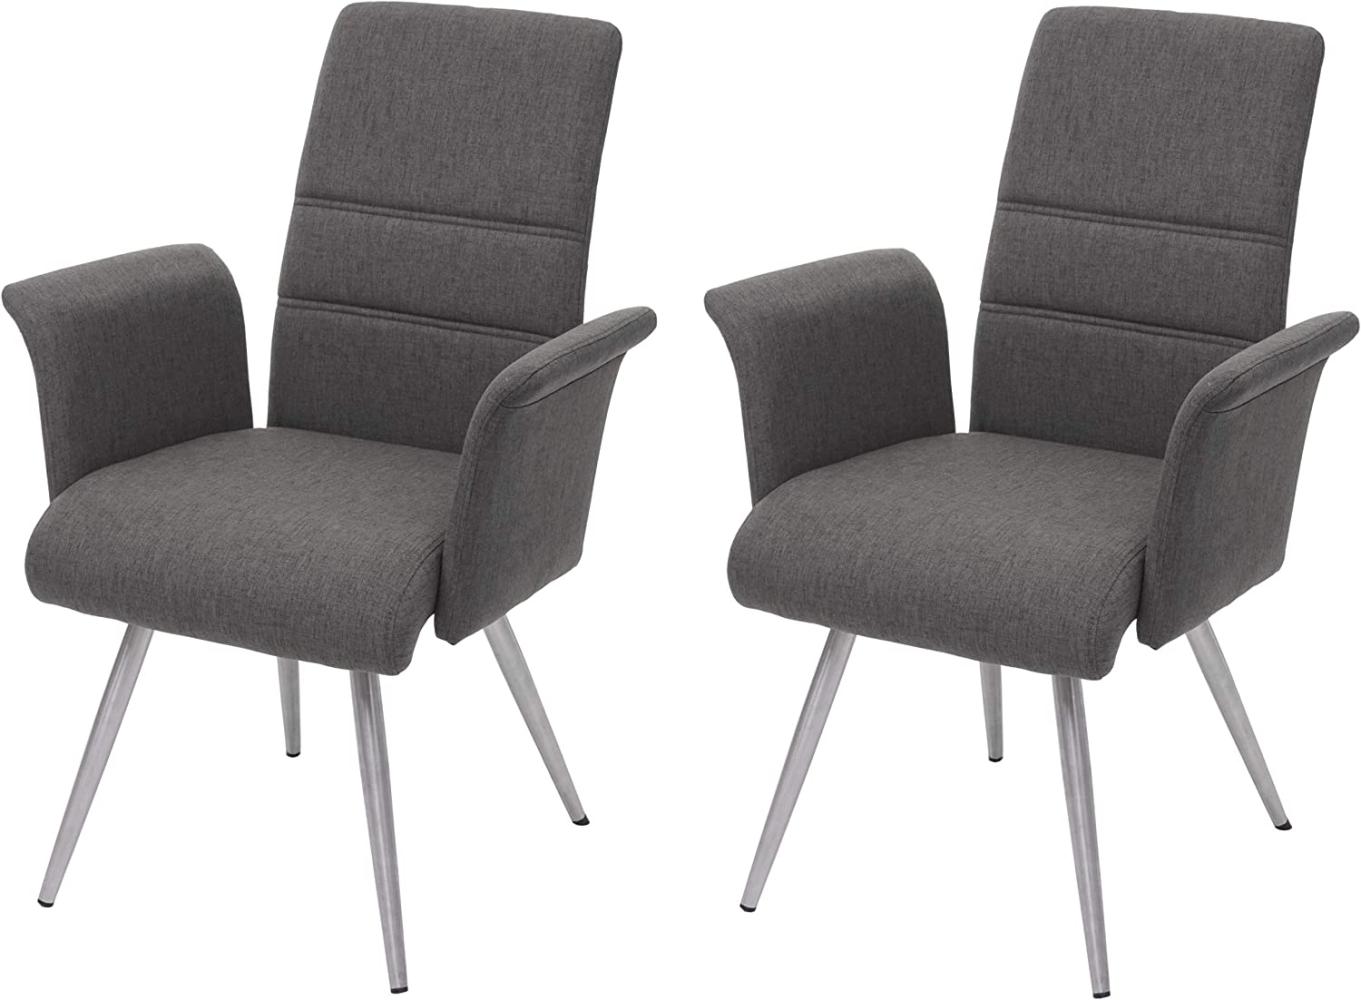 2er-Set Esszimmerstuhl HWC-G55, Küchenstuhl Stuhl mit Armlehne, Stoff/Textil Edelstahl gebürstet ~ grau-braun Bild 1